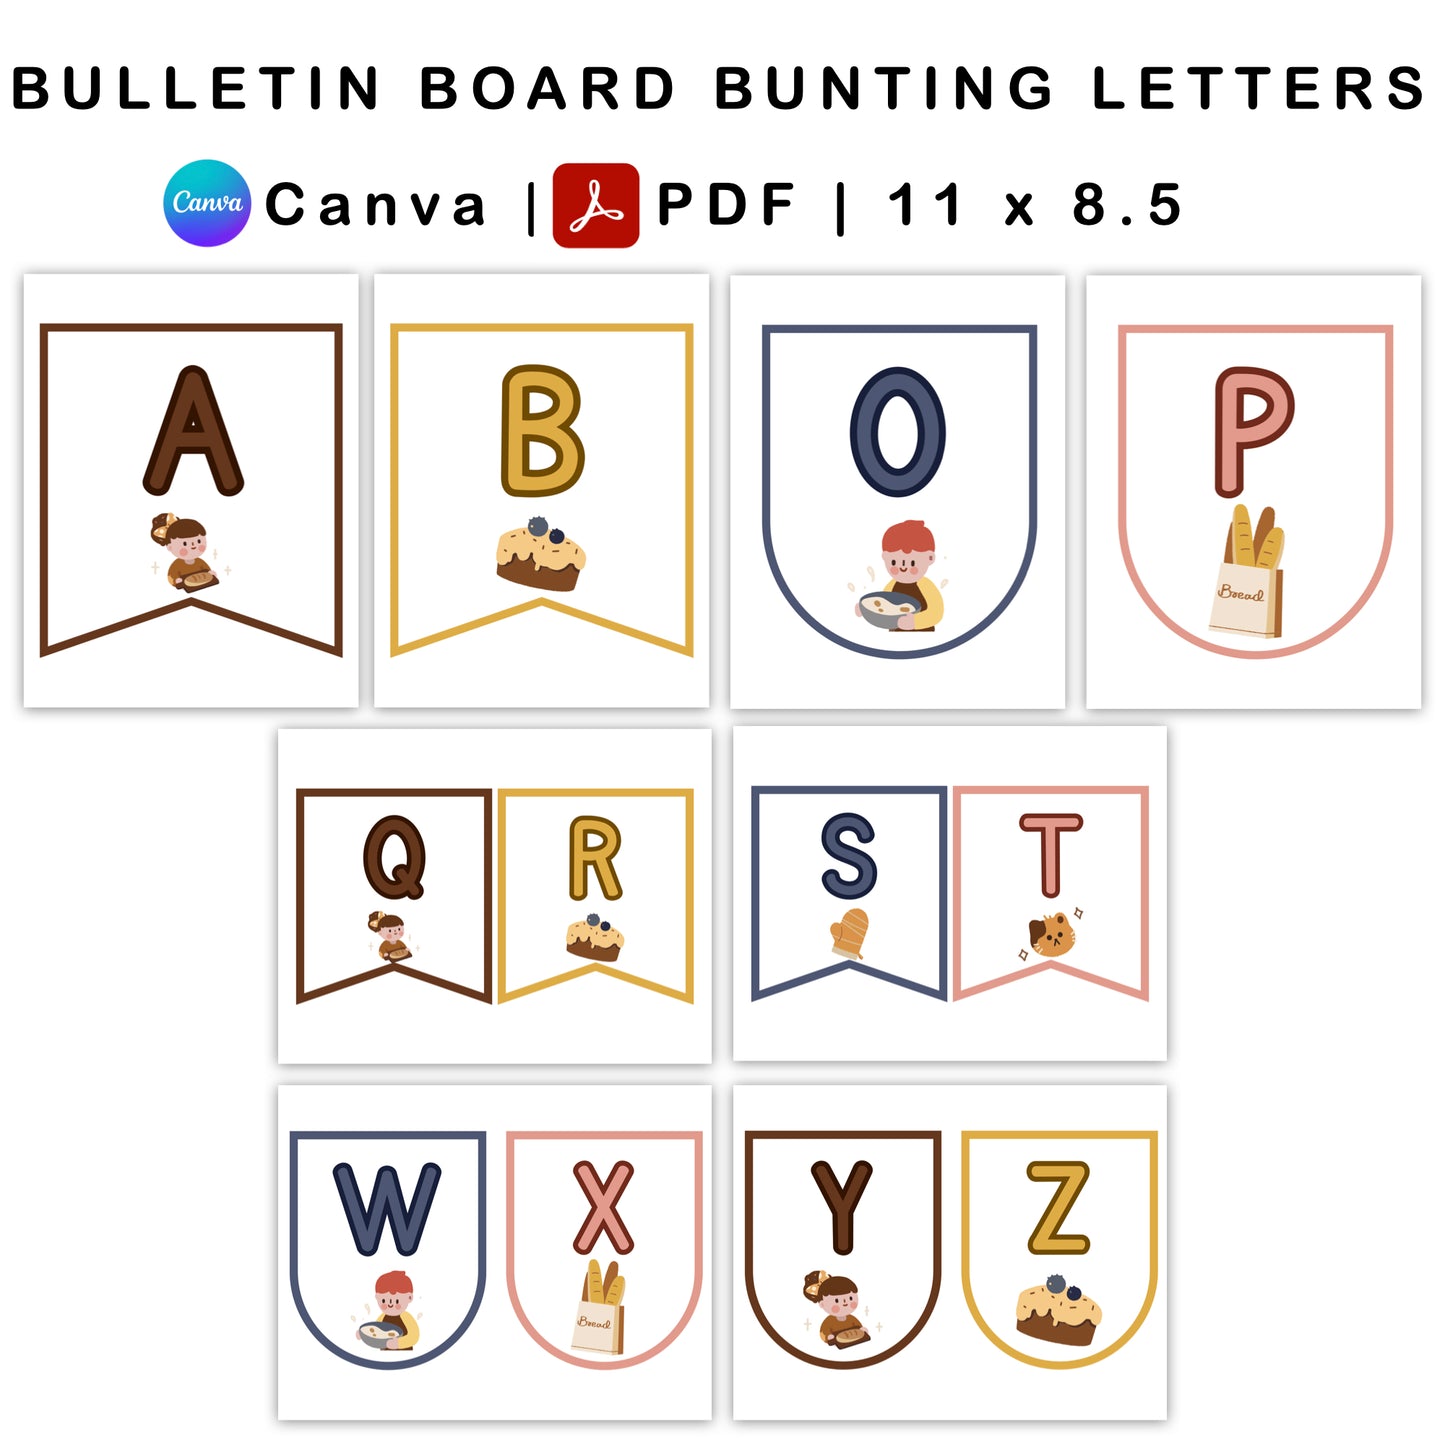 Bulletin Board Bunting Letters - Brown Bakery Theme | Editable